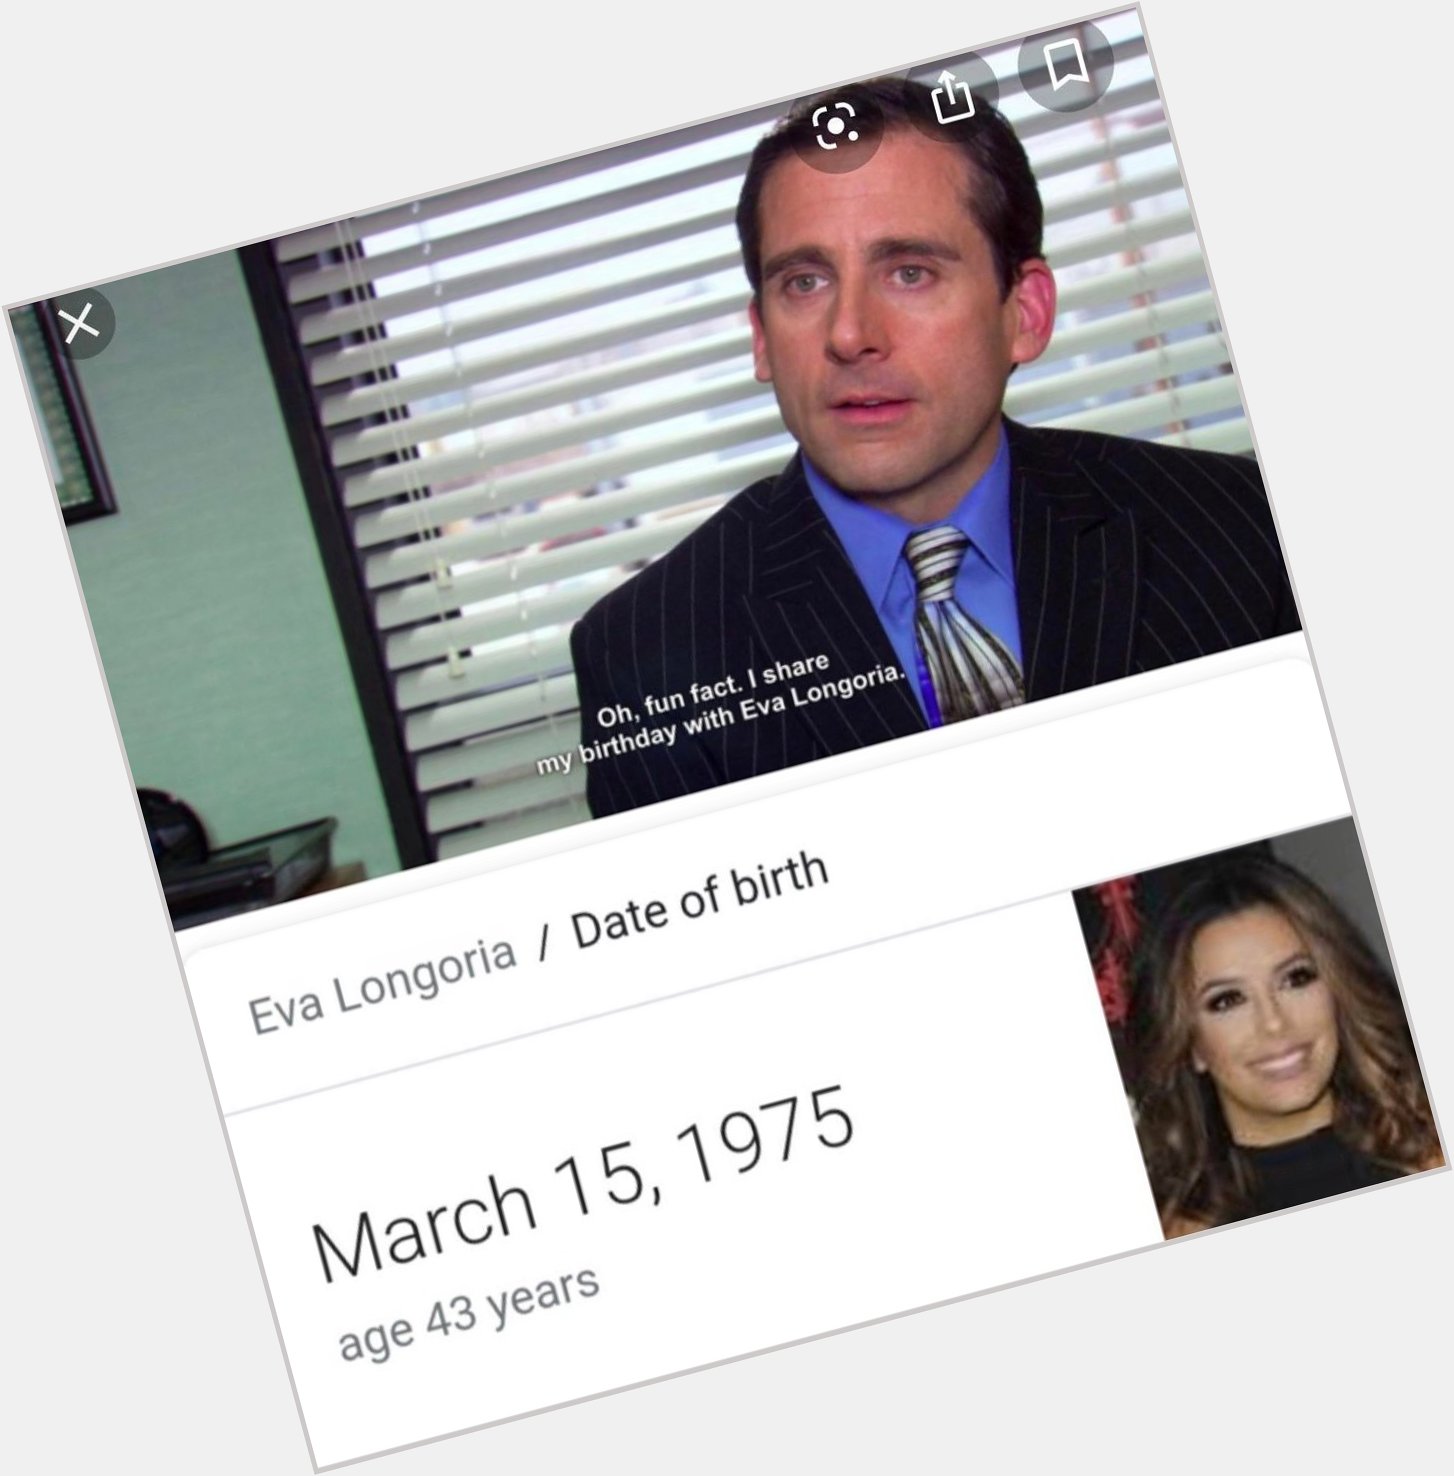  He shares the same birthday with Eva Longoria. Happy Birthday, Michael Scott!!! 